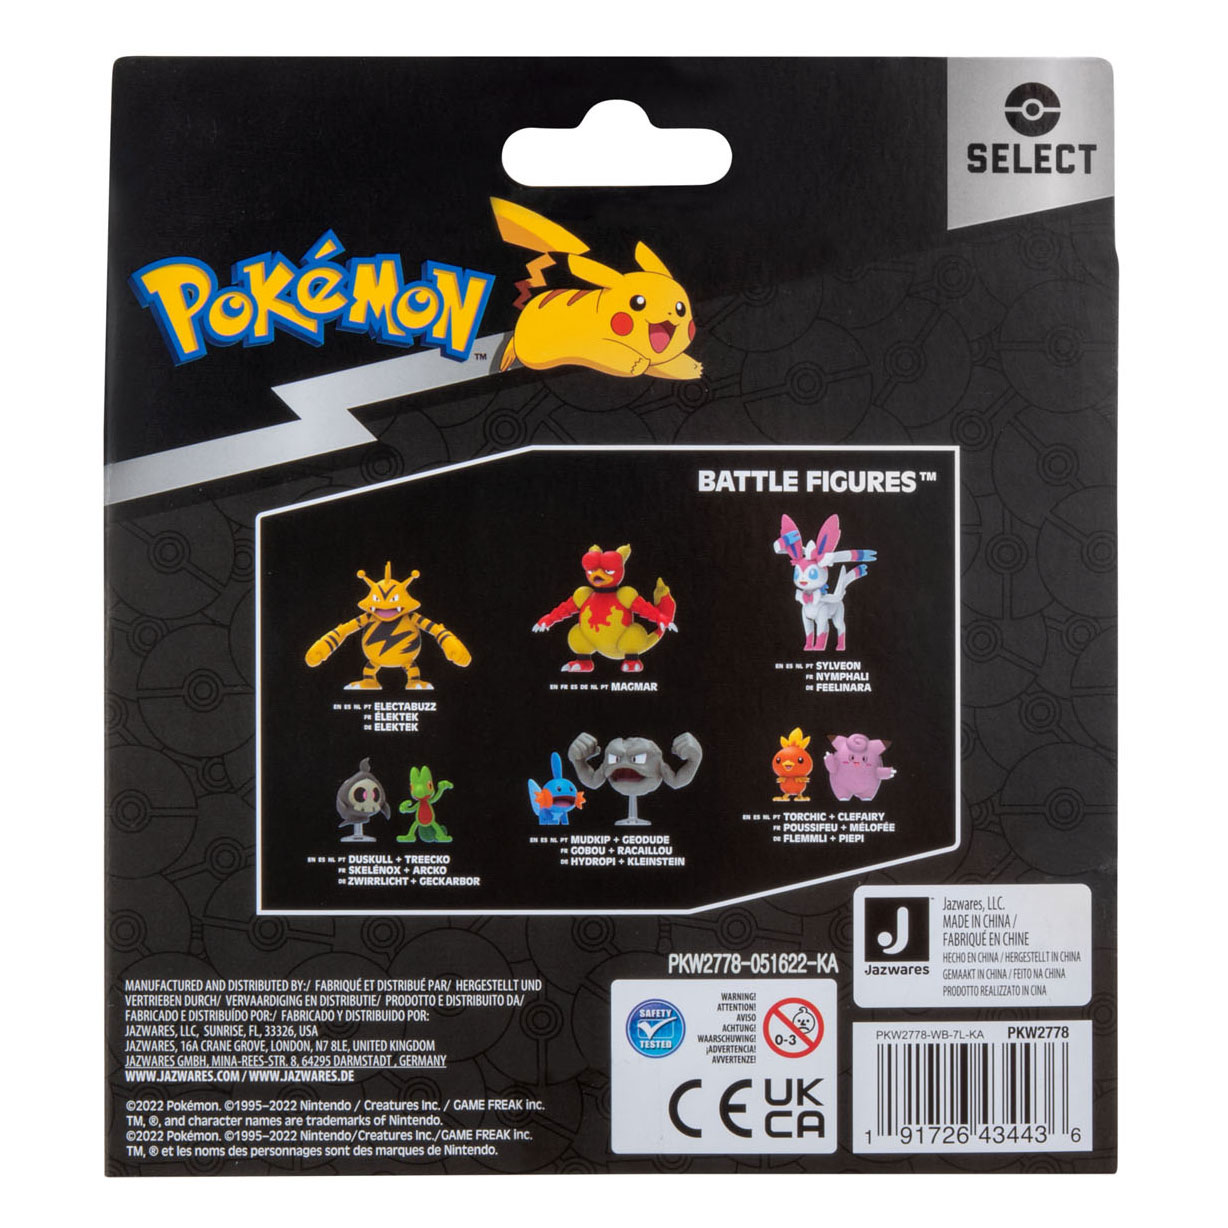 Pokémon - Evolution multi-pack, Pokemon